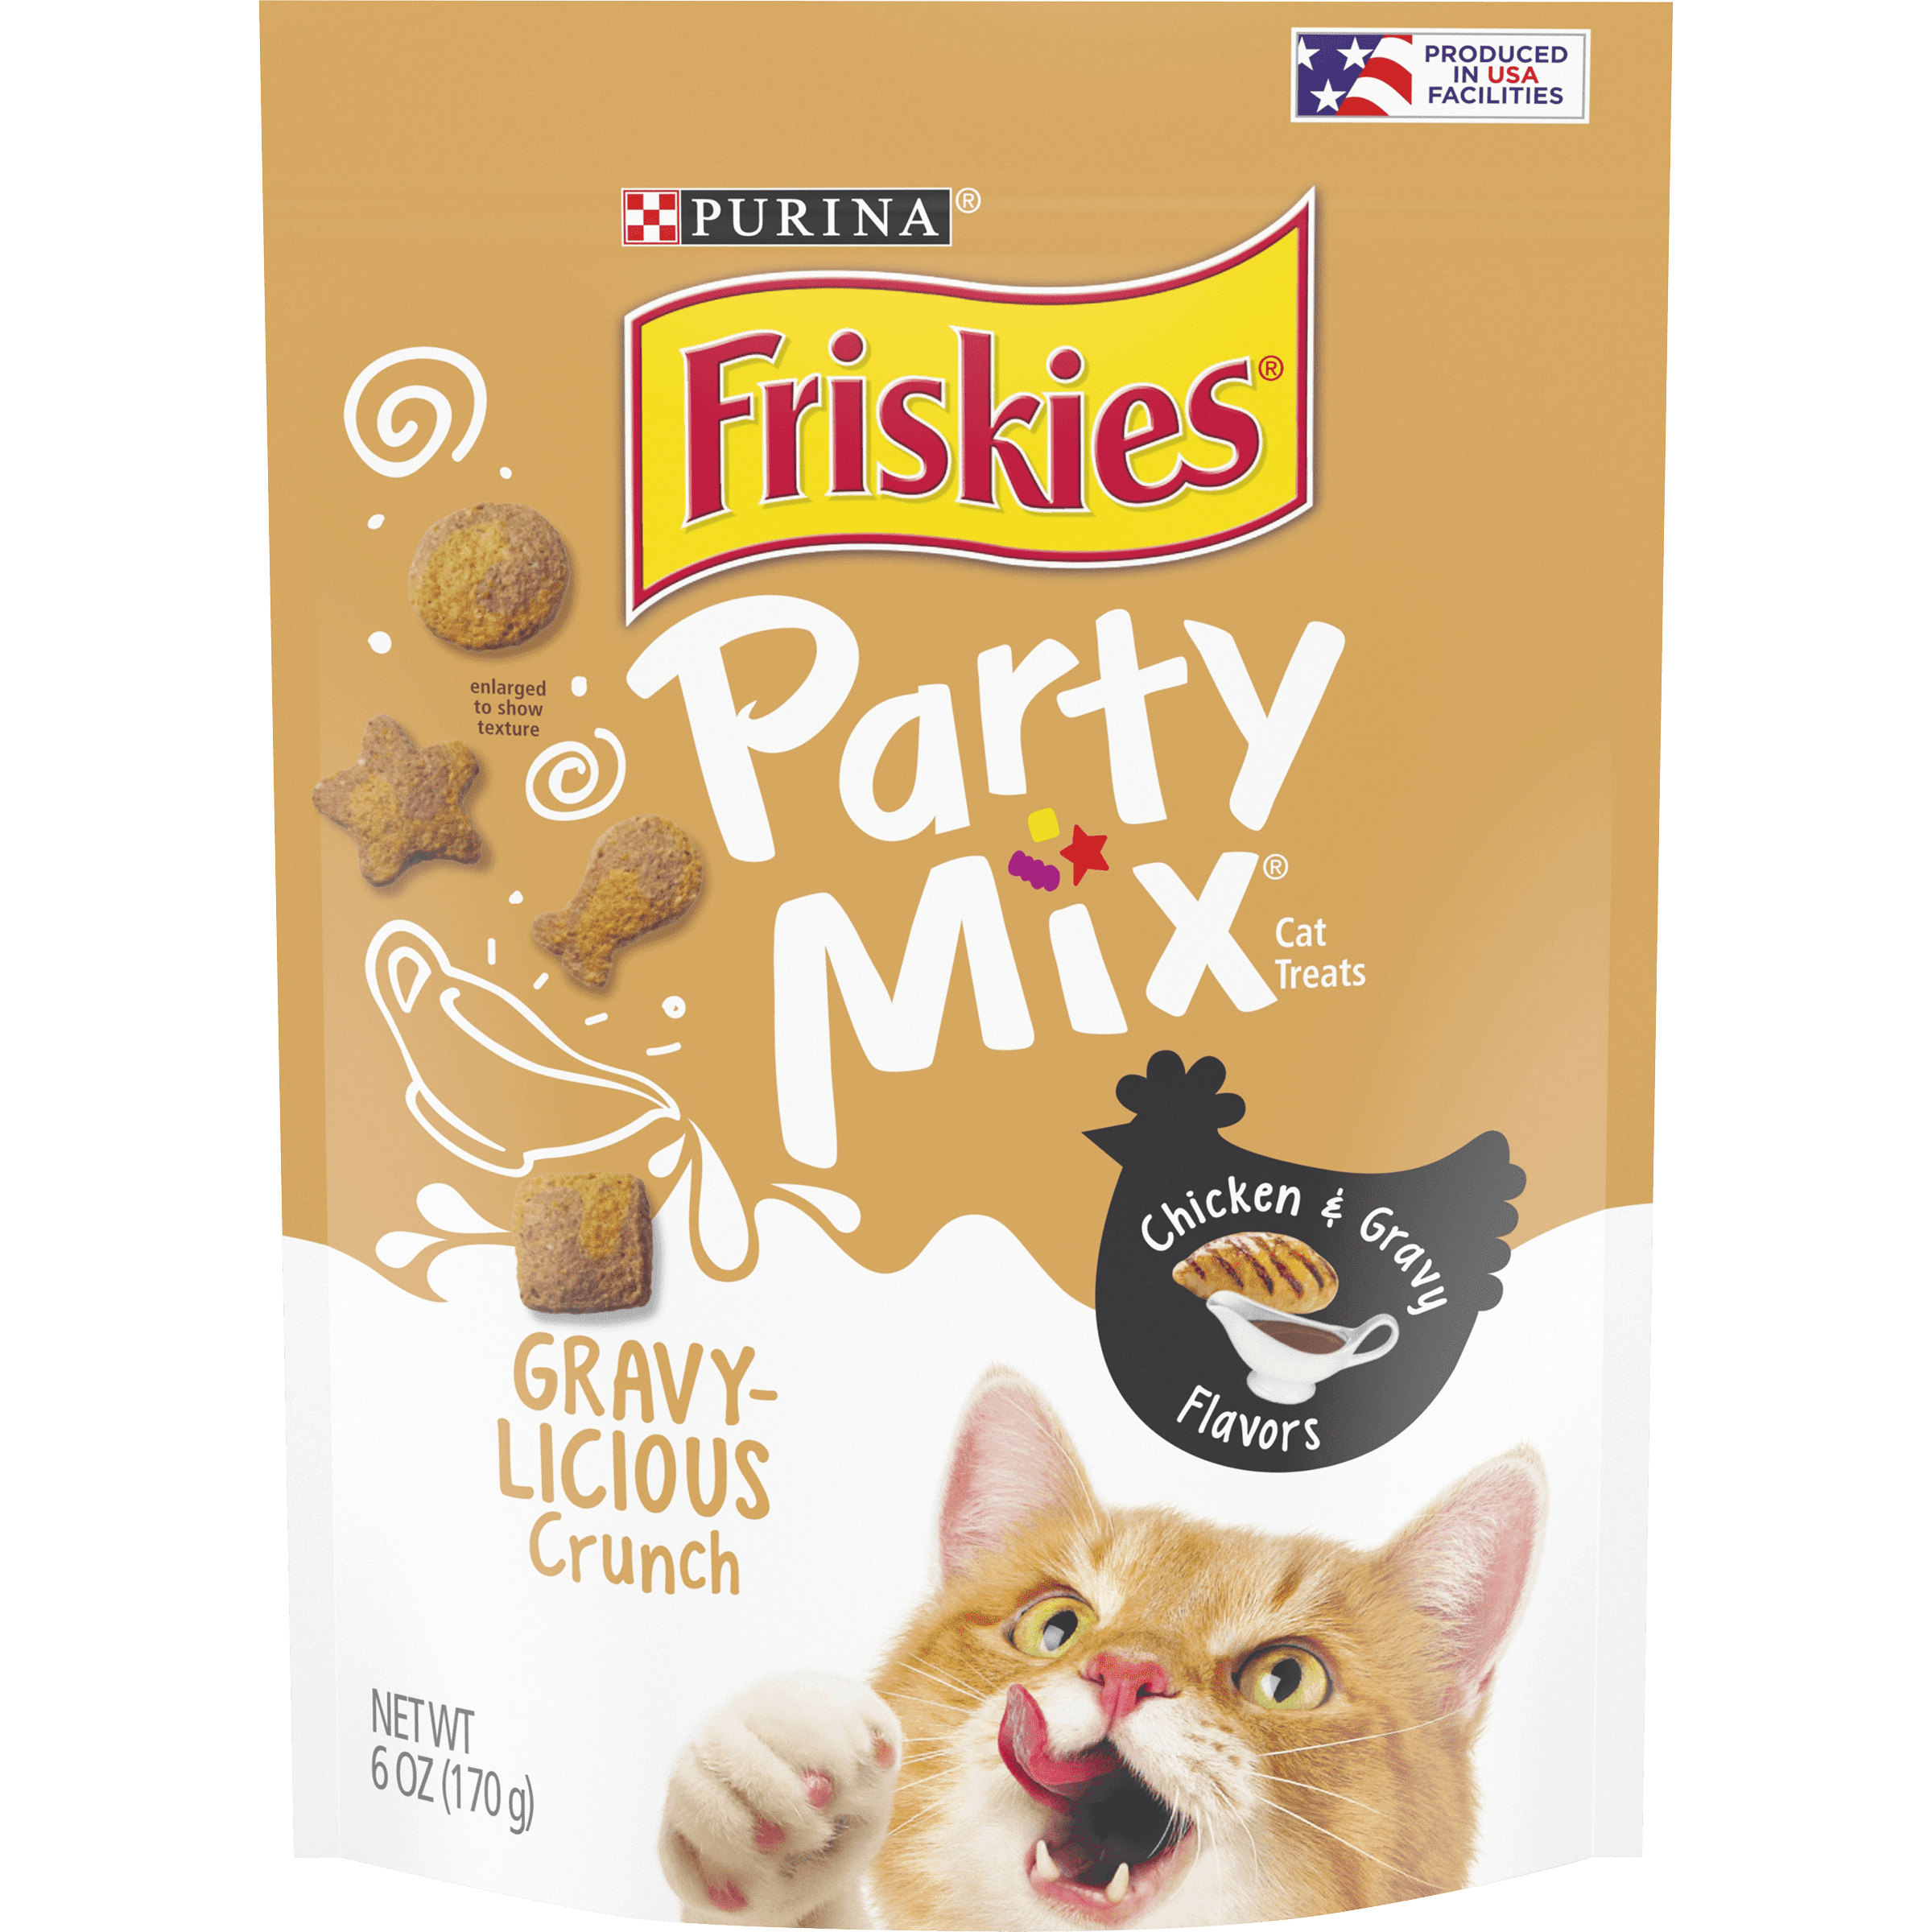 Friskies Cat Treats, Party Mix Crunch Gravylicious Chicken & Gravy